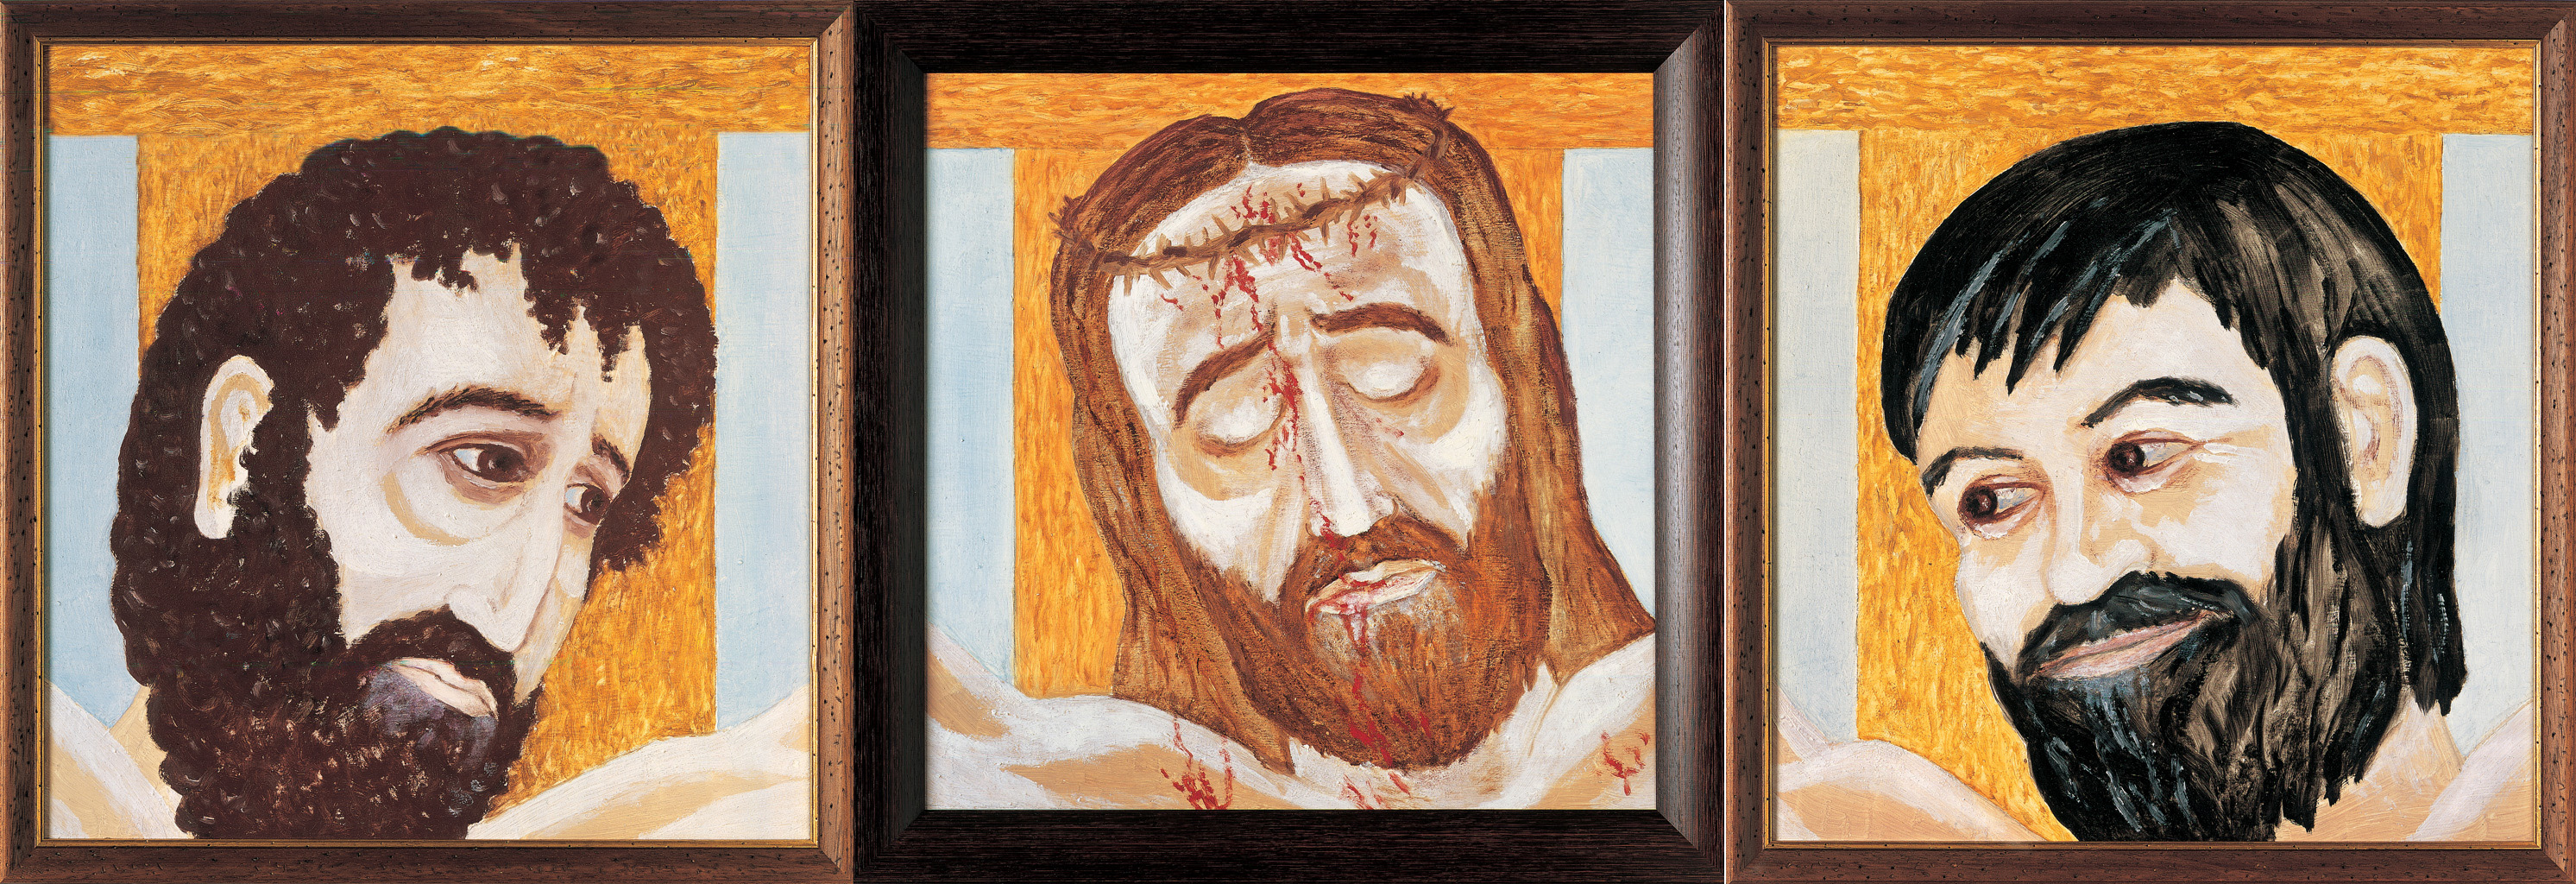 At Golgotha. (repentant, Jesus, scoffer) (plywood, oil)